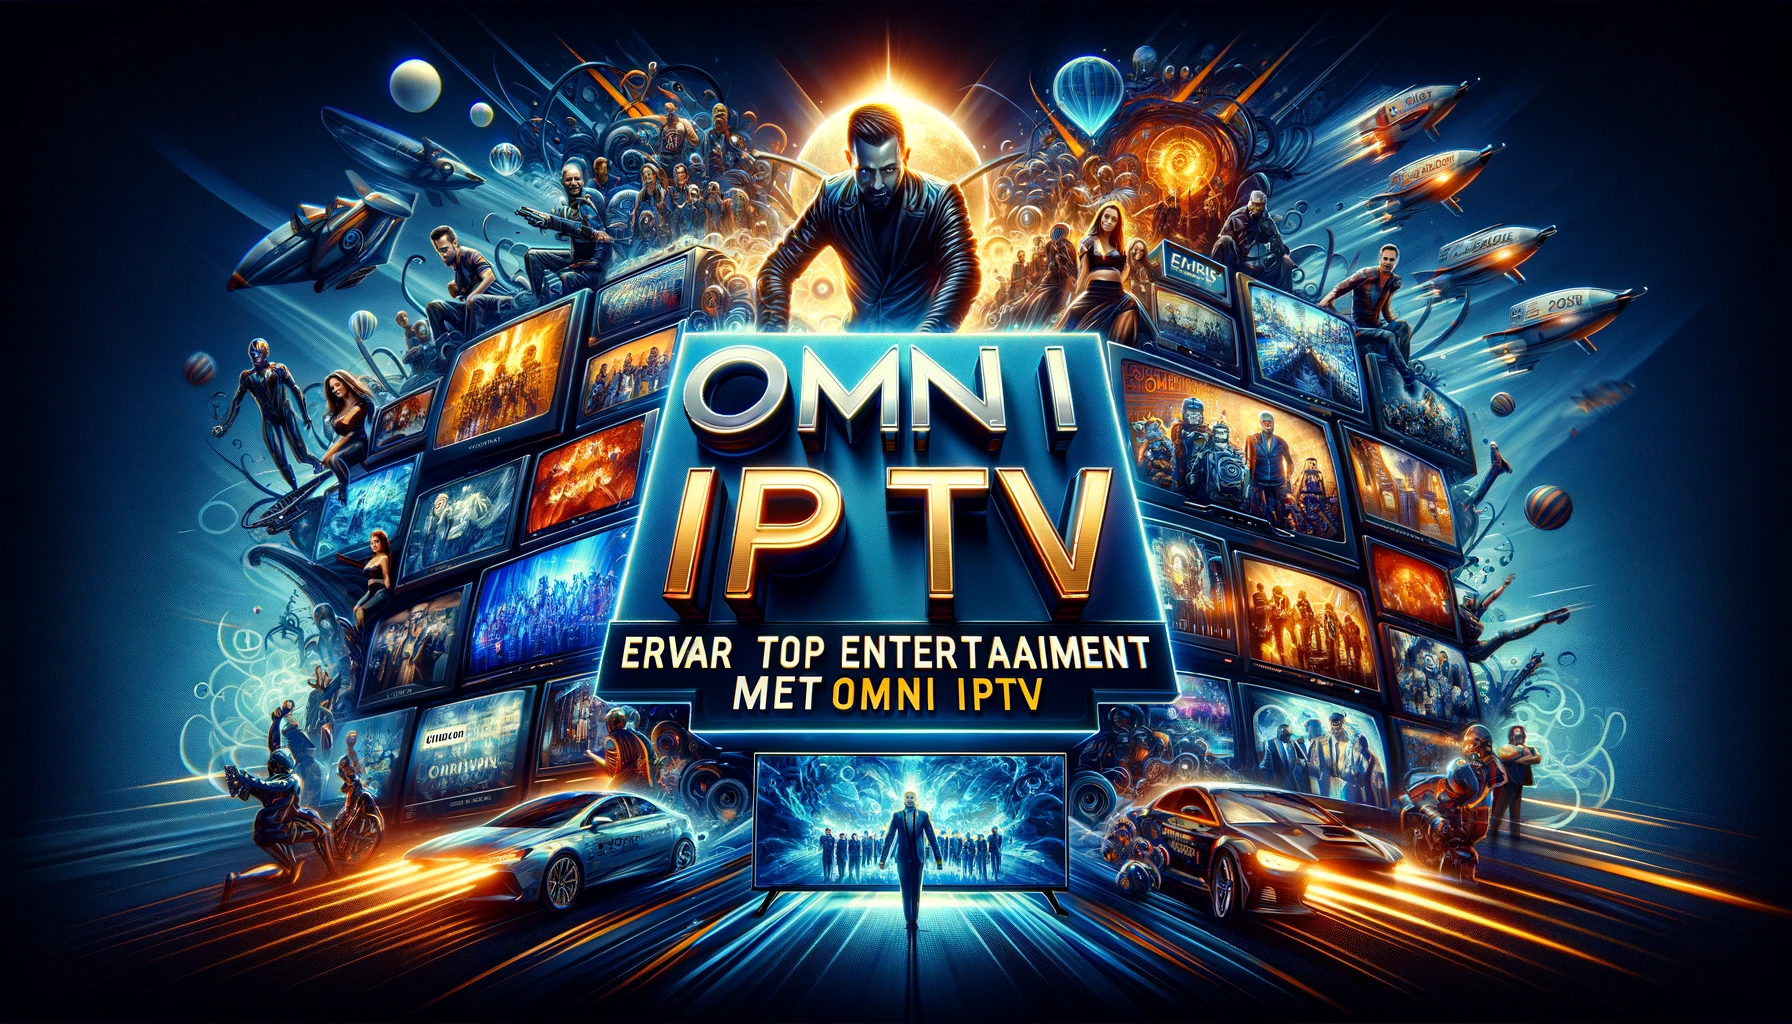 IPTV Nederland - Omni IPTV